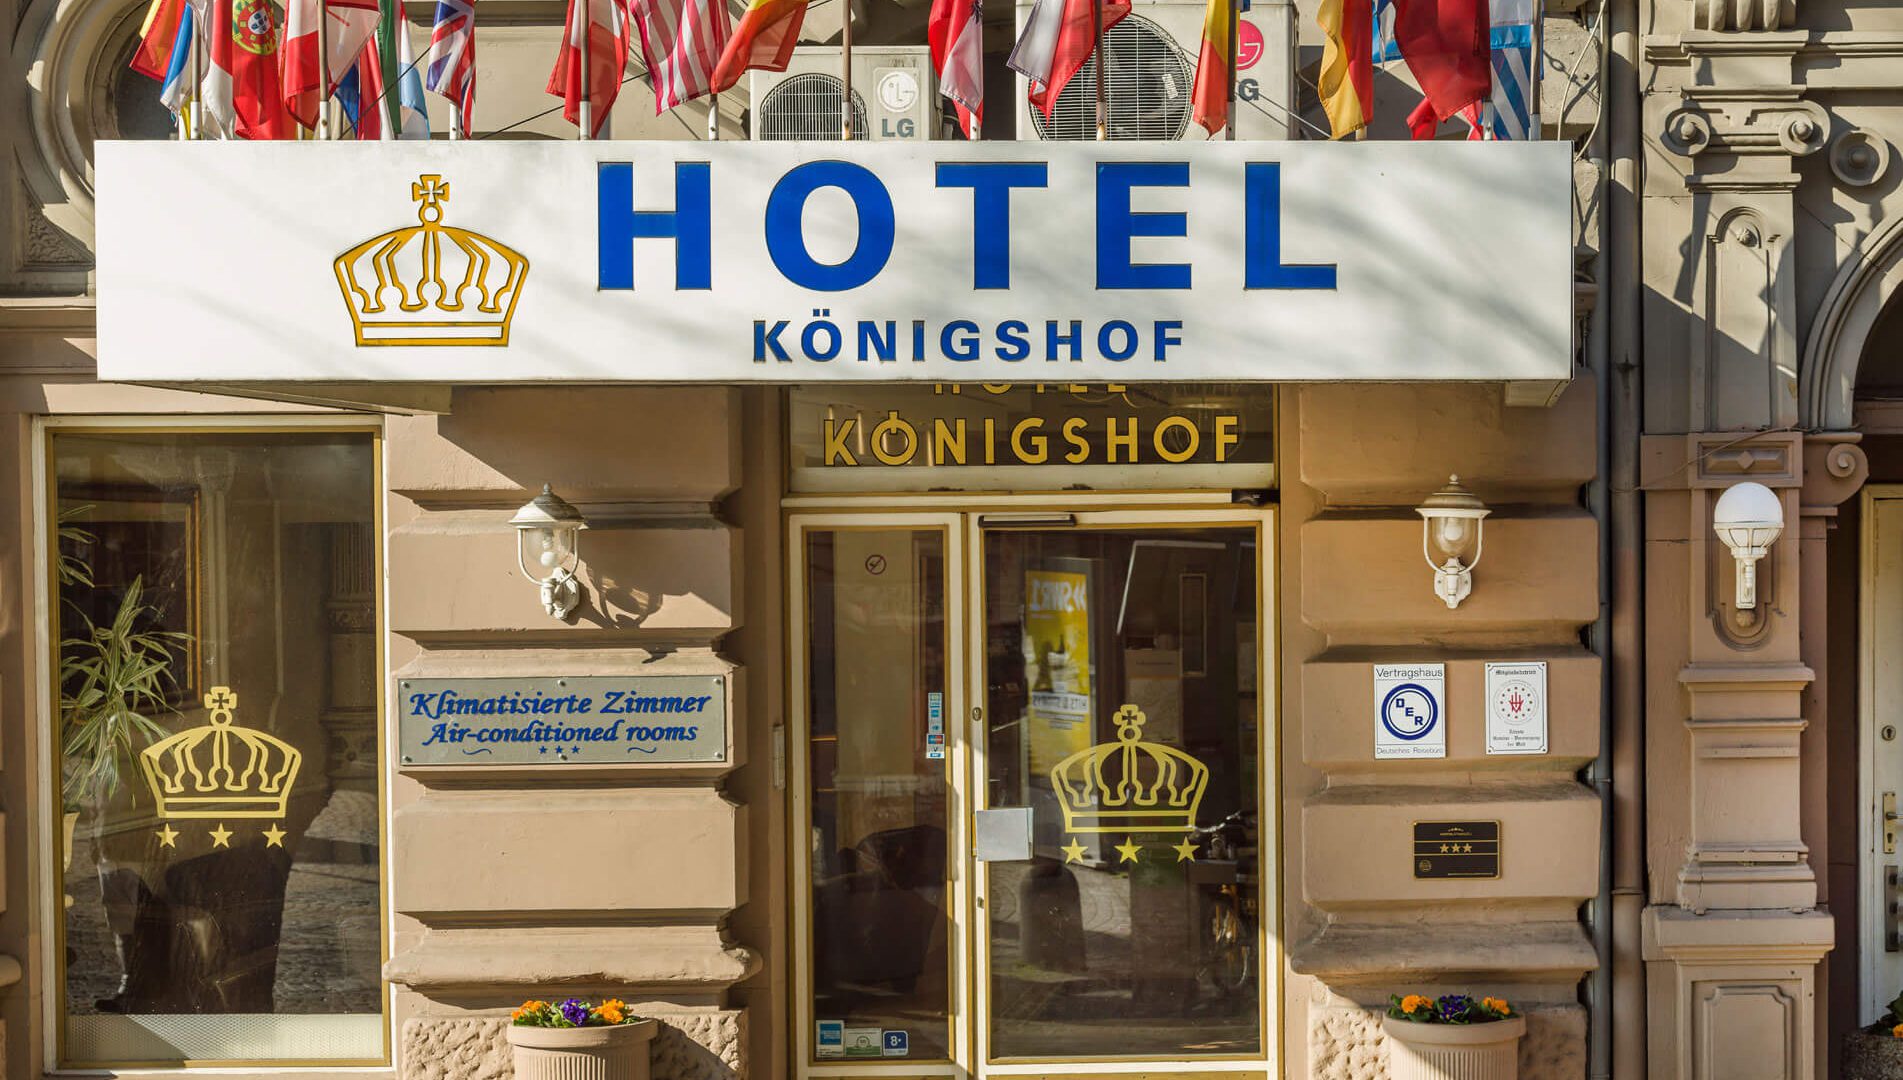 Hotel Königshof entrance